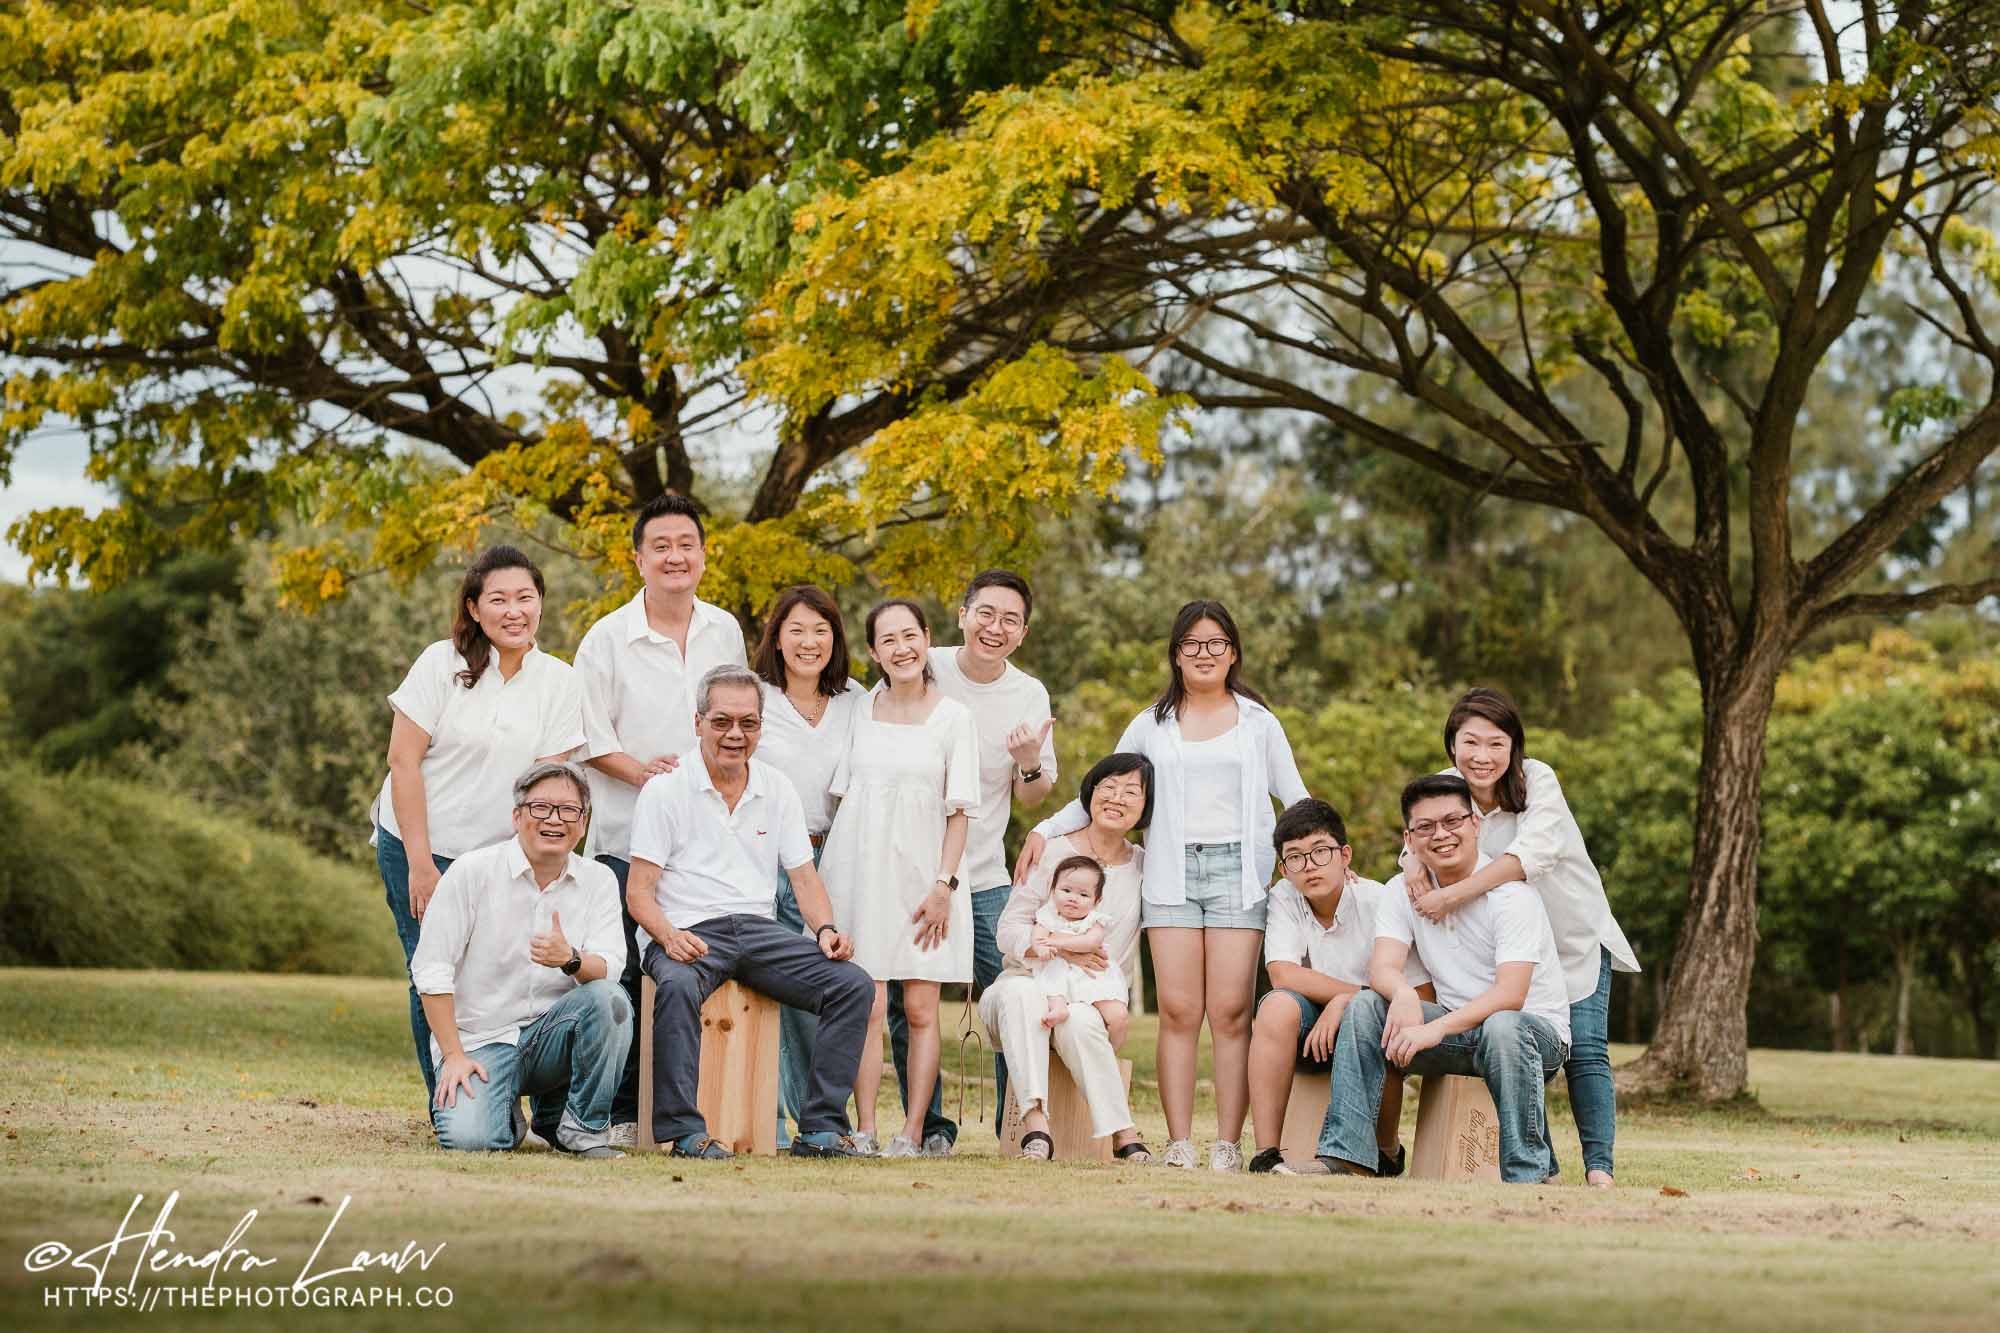 Outdoor multi generation family photoshoot